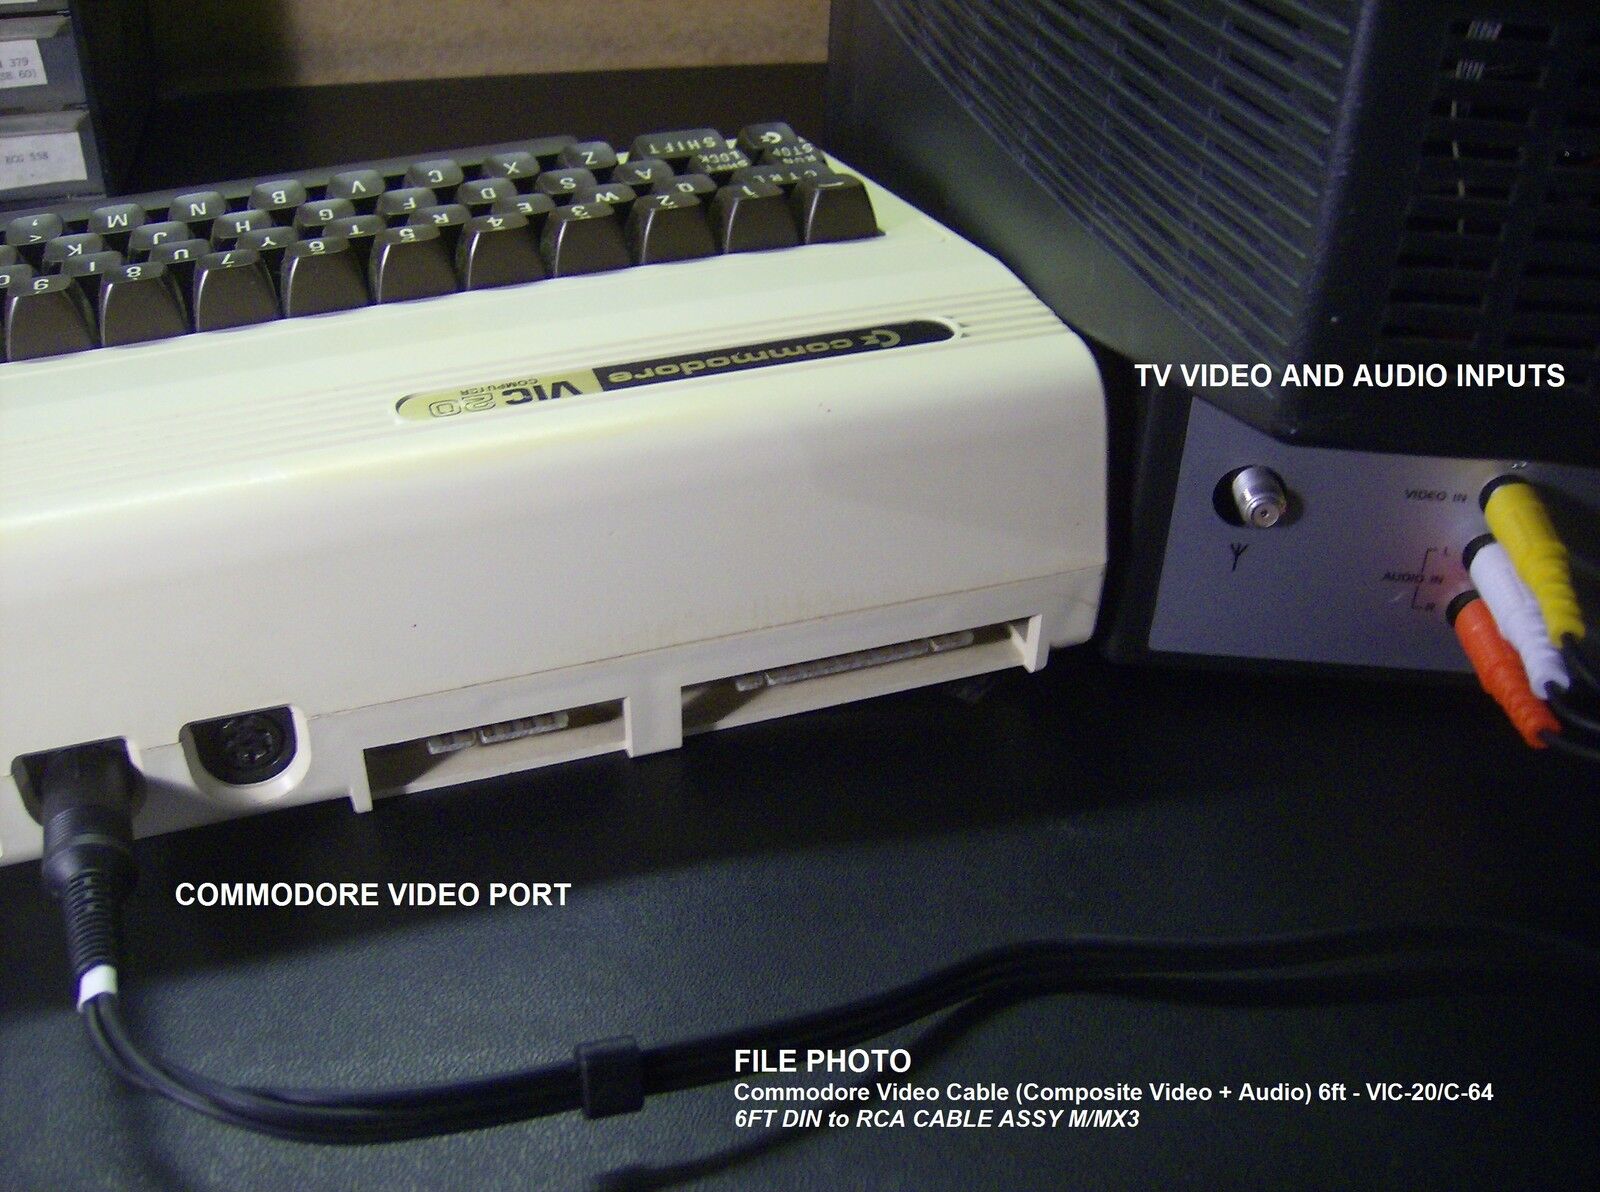 6\' Commodore Video A/V Cable (Composite Video + Audio) - VIC-20/C-64 (5pin)